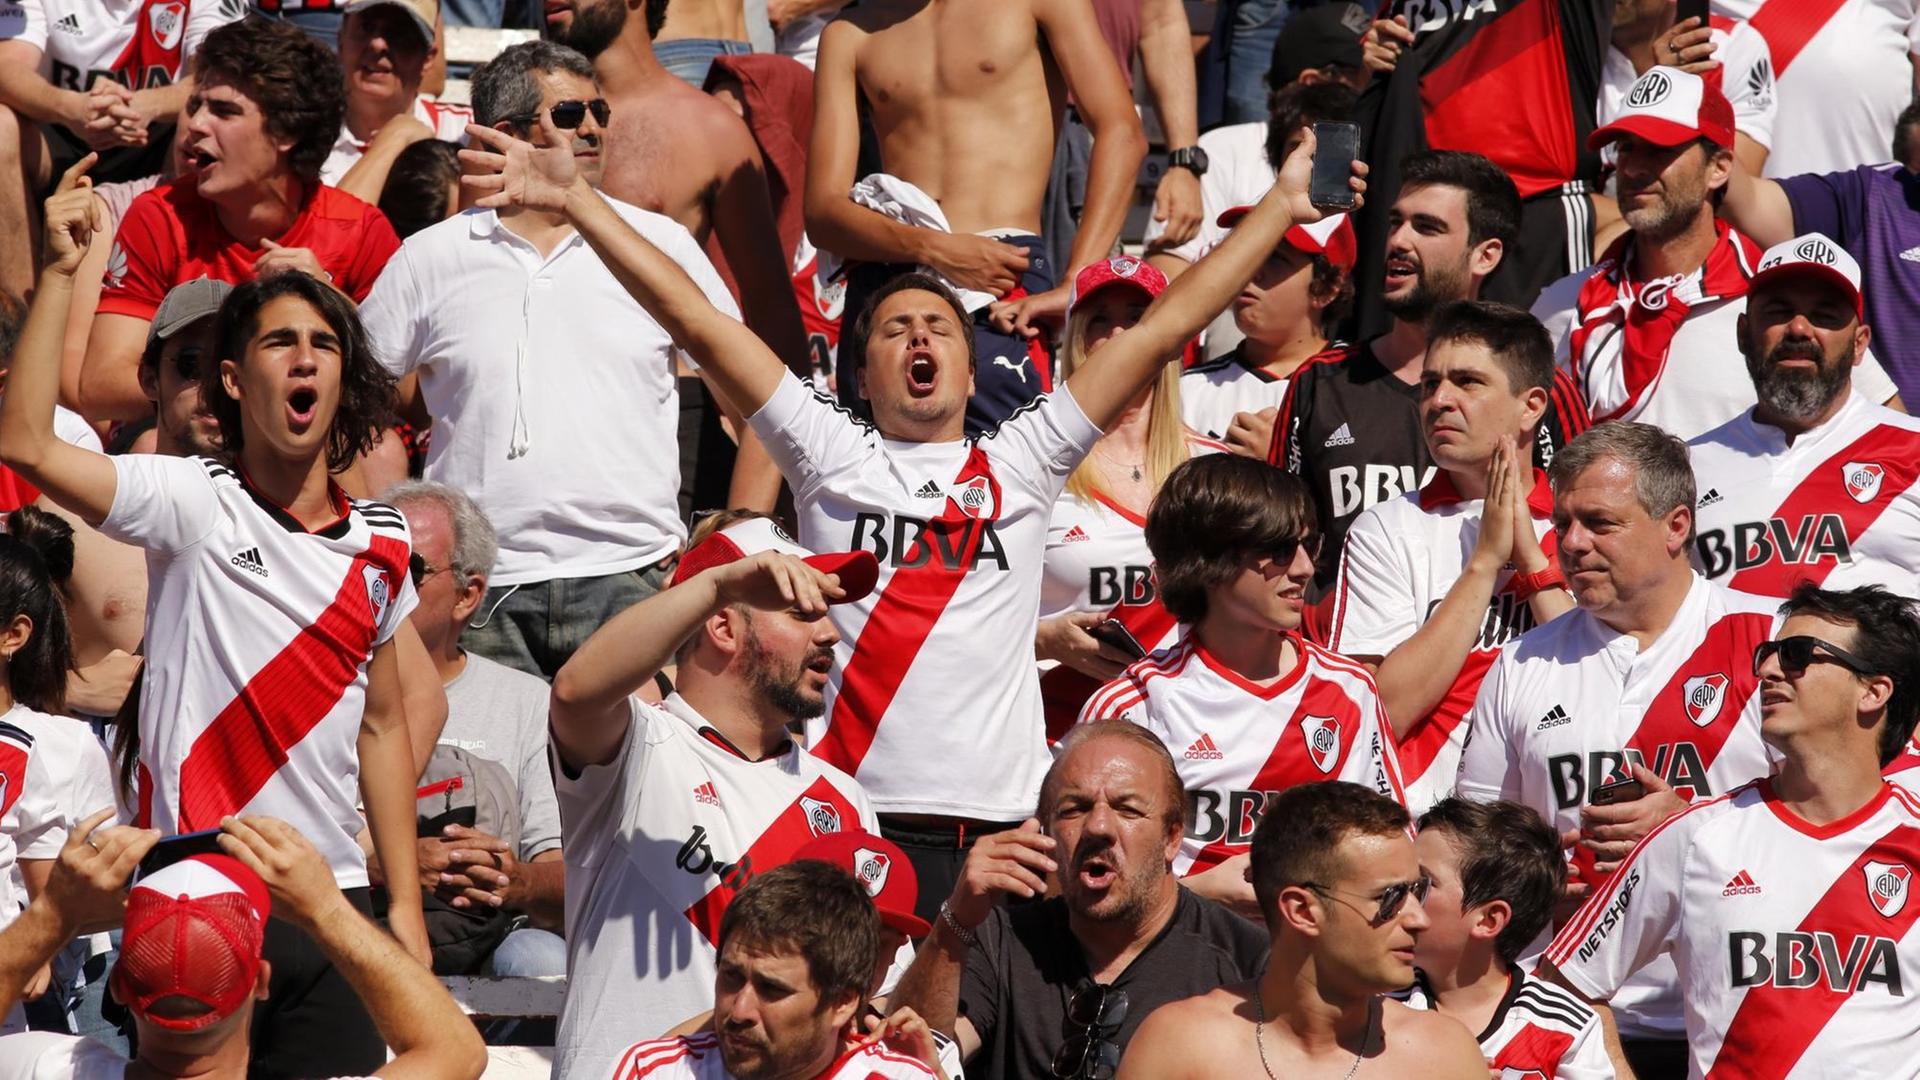 Rückspiel des Finales der Copa Libertadores - River-Fans im Stadion